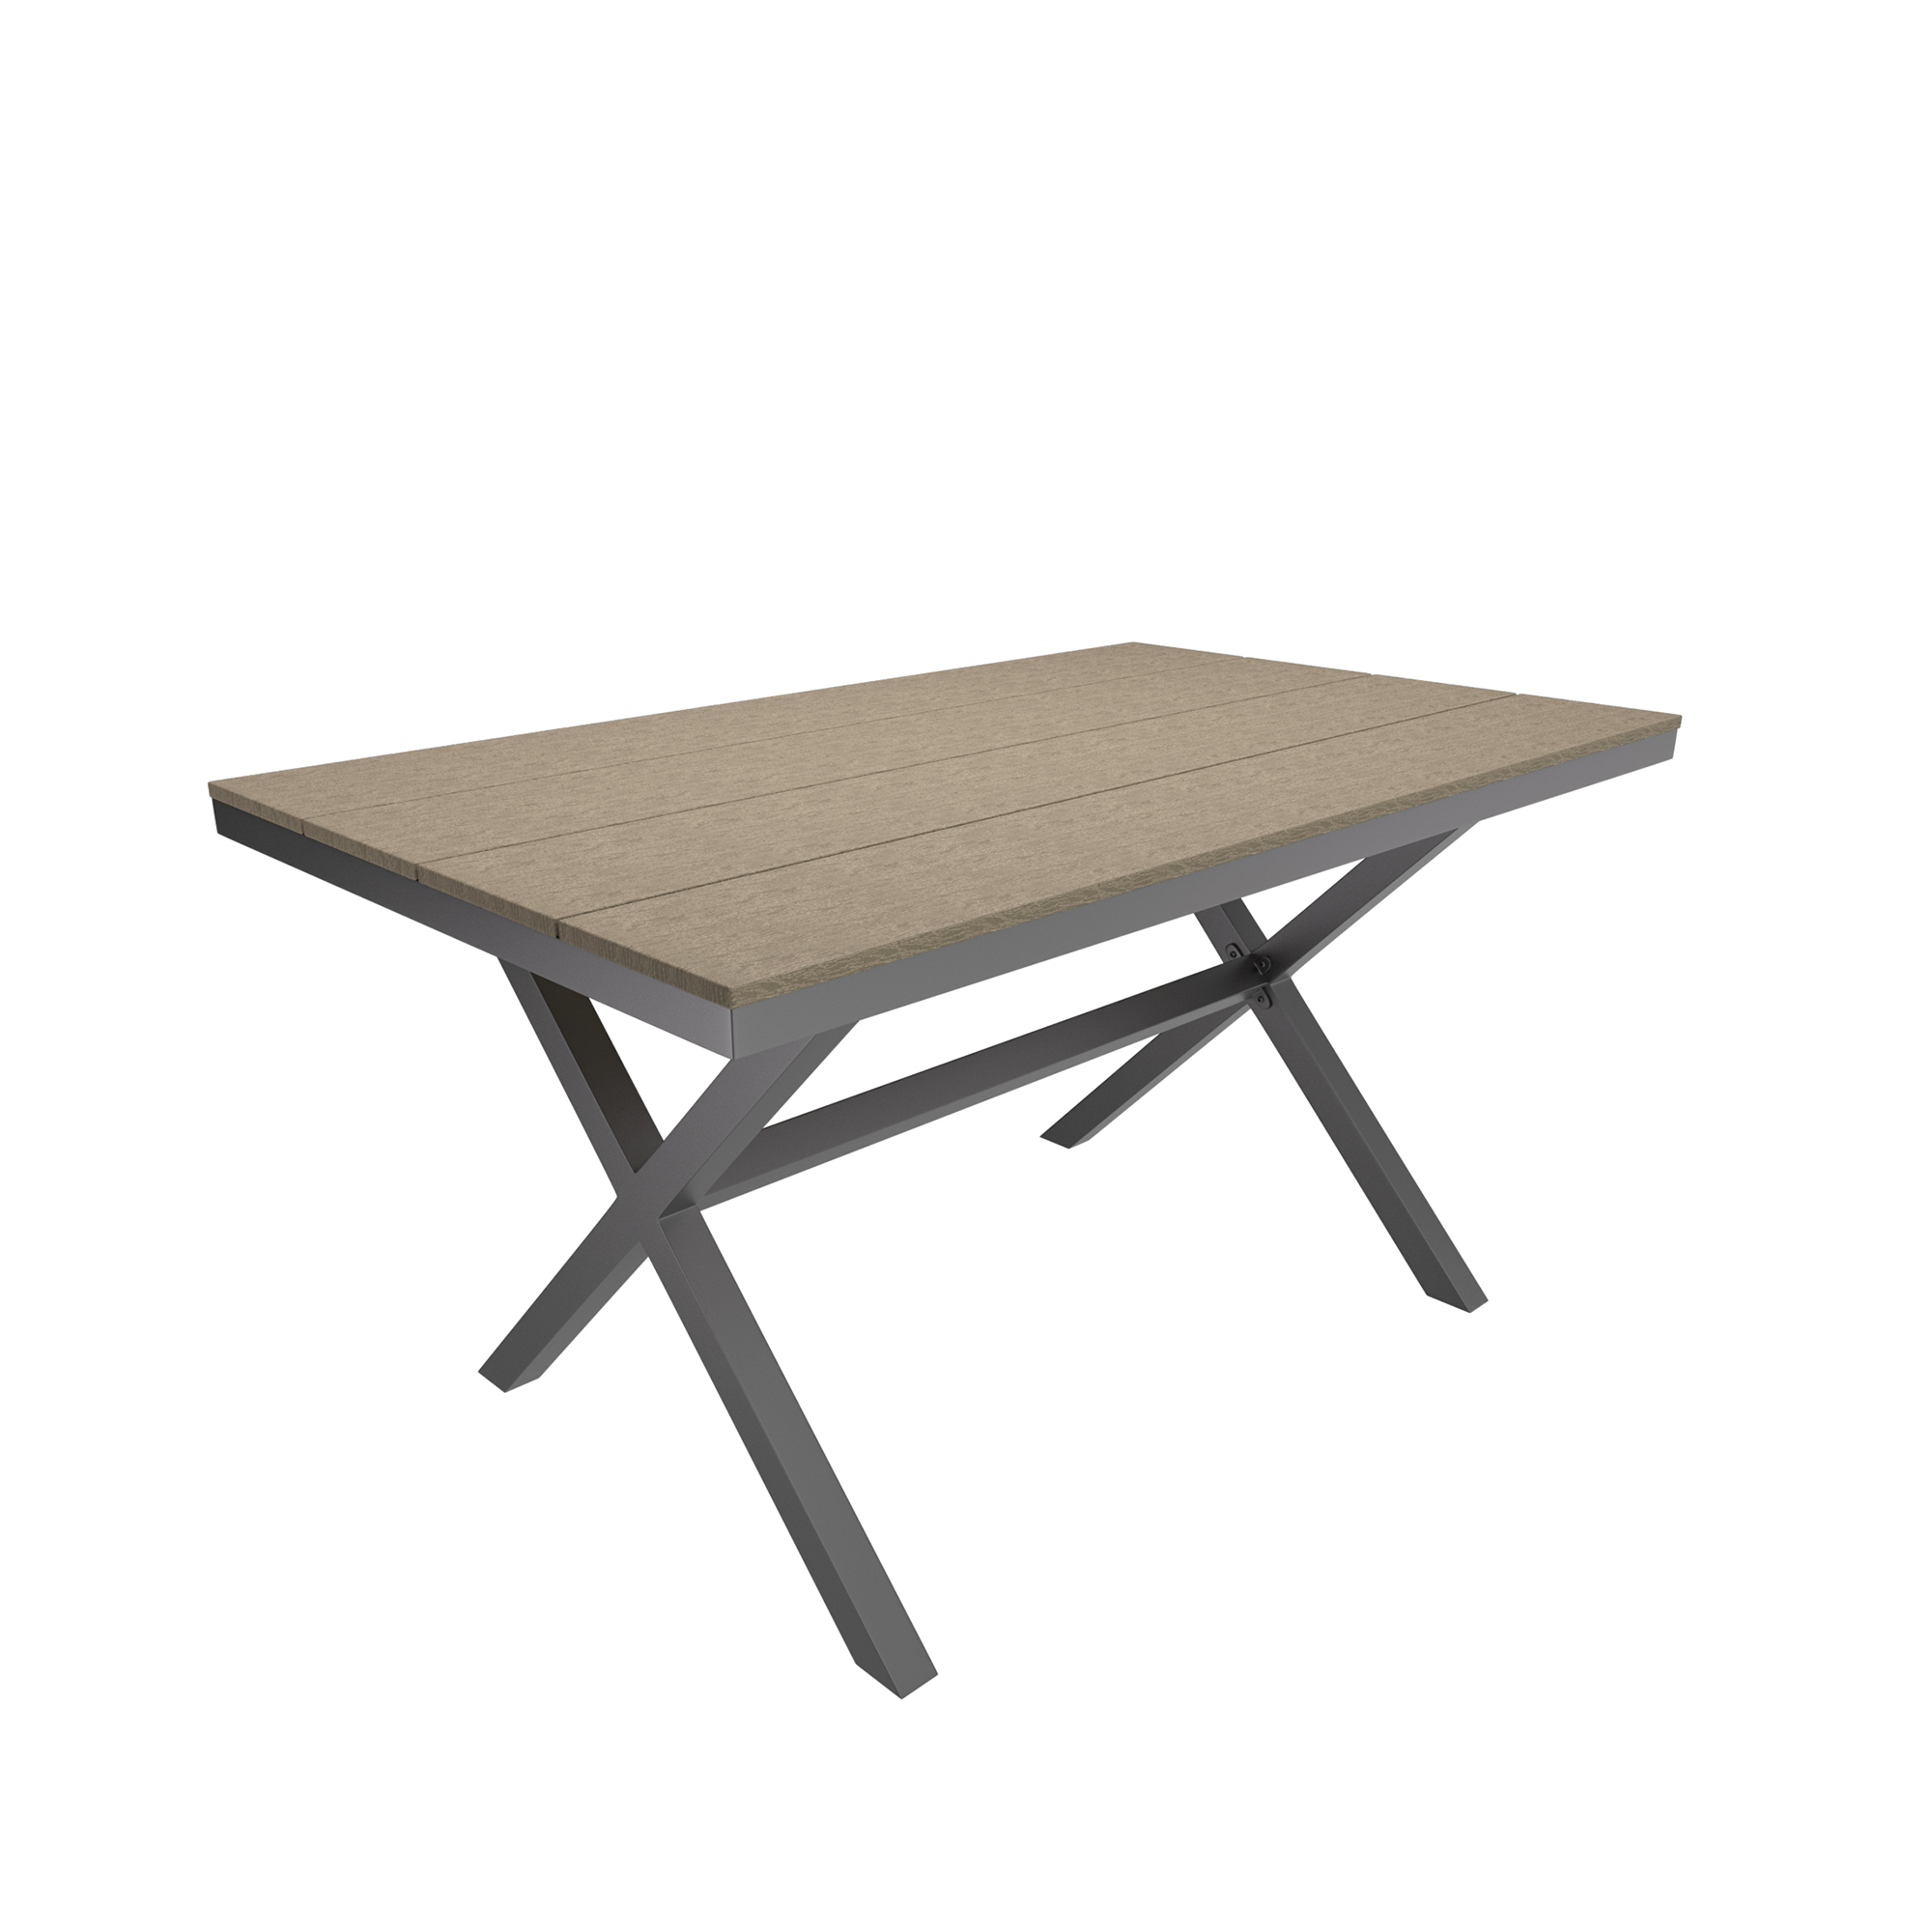 Mondawe Black Rectangular Outdoor Dining Table with Imitation Wood Grain-Mondawe